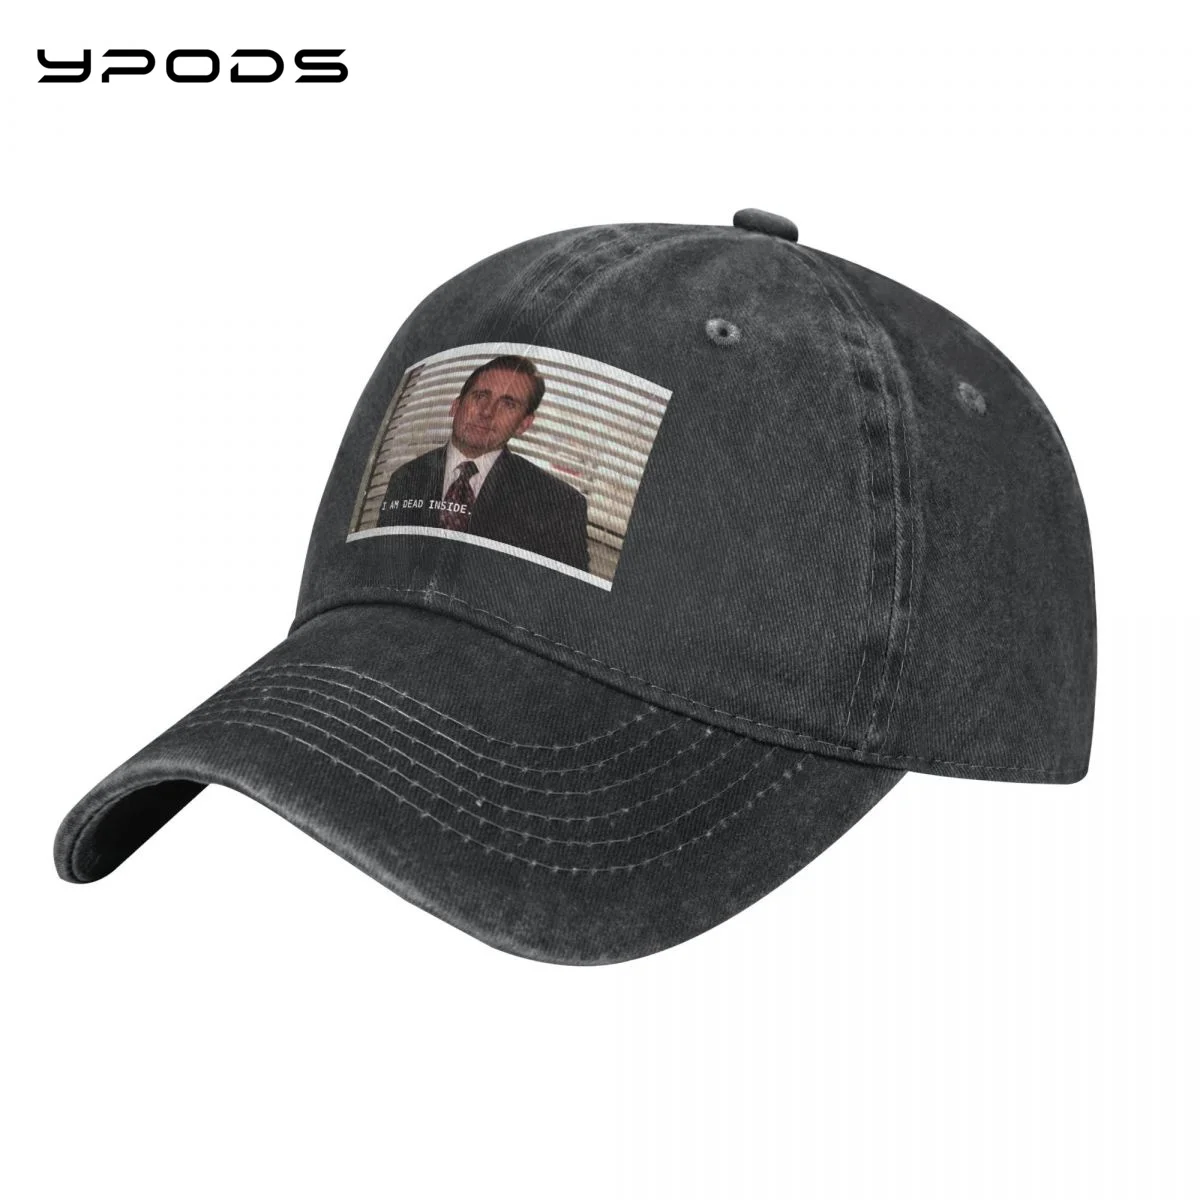 

I Am Dead Inside Baseball Caps for Men Women Vintage Washed Cotton Dad Hats Print Snapback Cap Hat